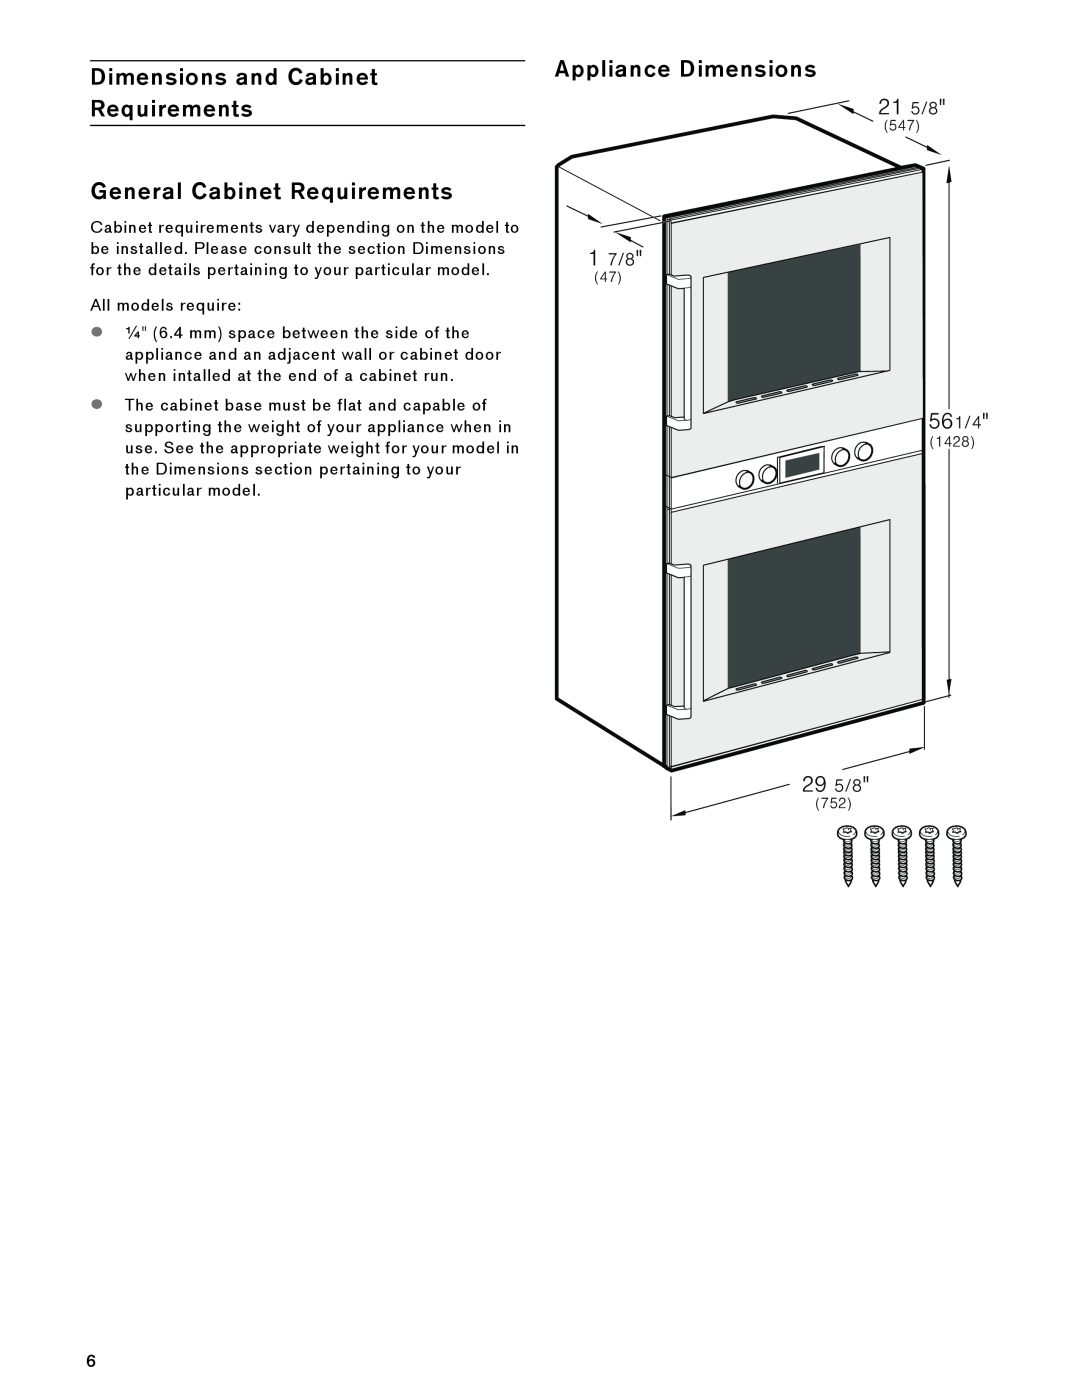 Gaggenau BX 481 610 Dimensions and Cabinet Requirements, General Cabinet Requirements, Appliance Dimensions,  